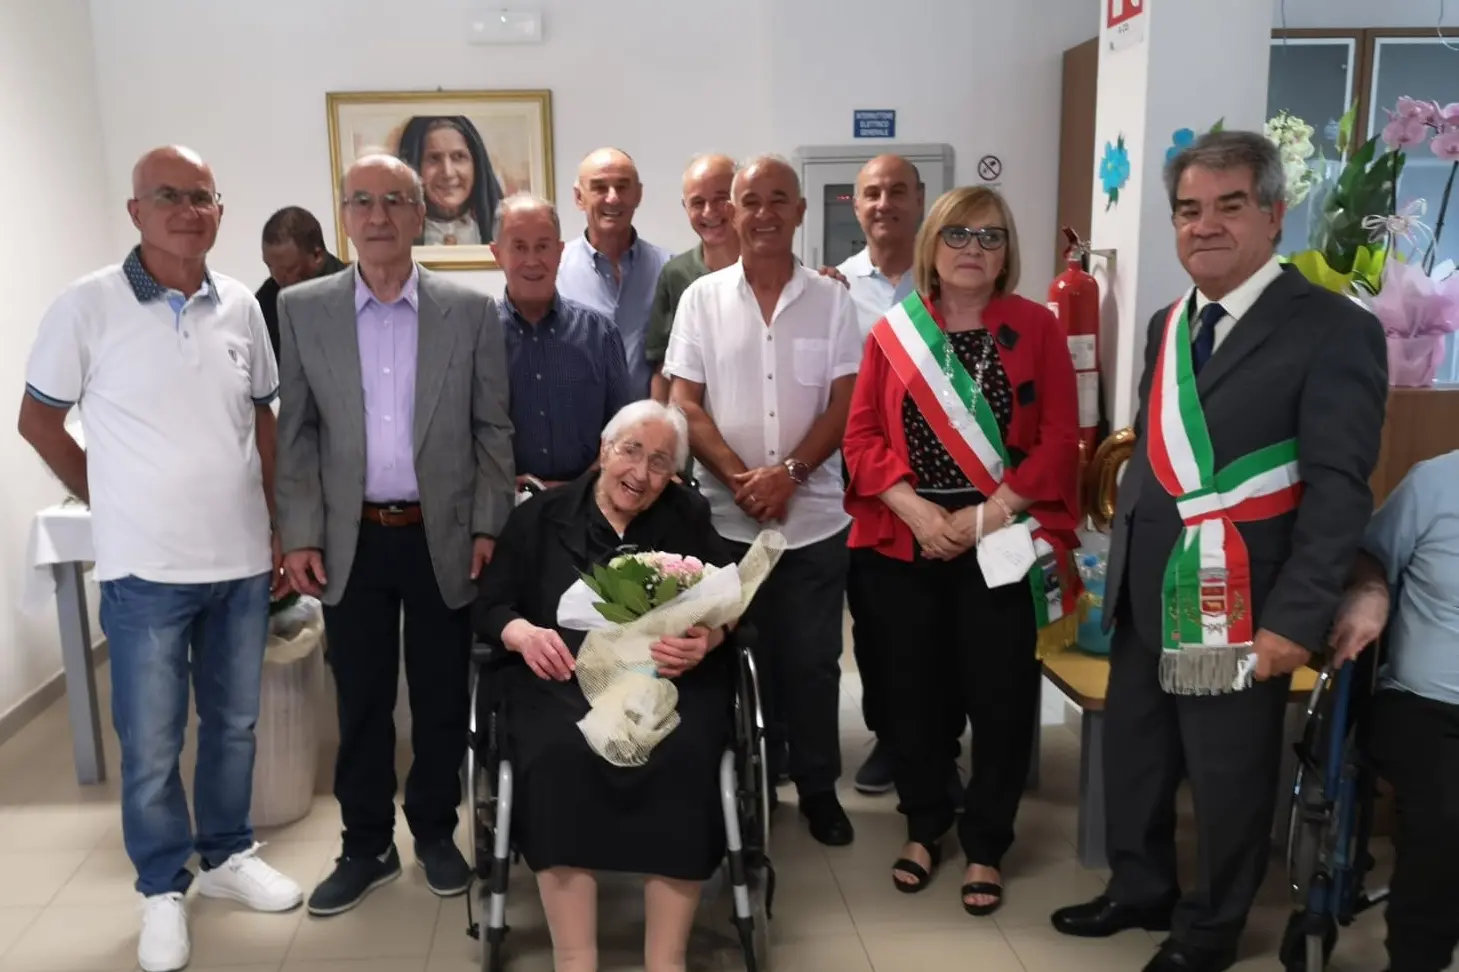 Giovanna Maria Masia festeggiata per i suoi 100 anni (foto di Giacomo Pala)